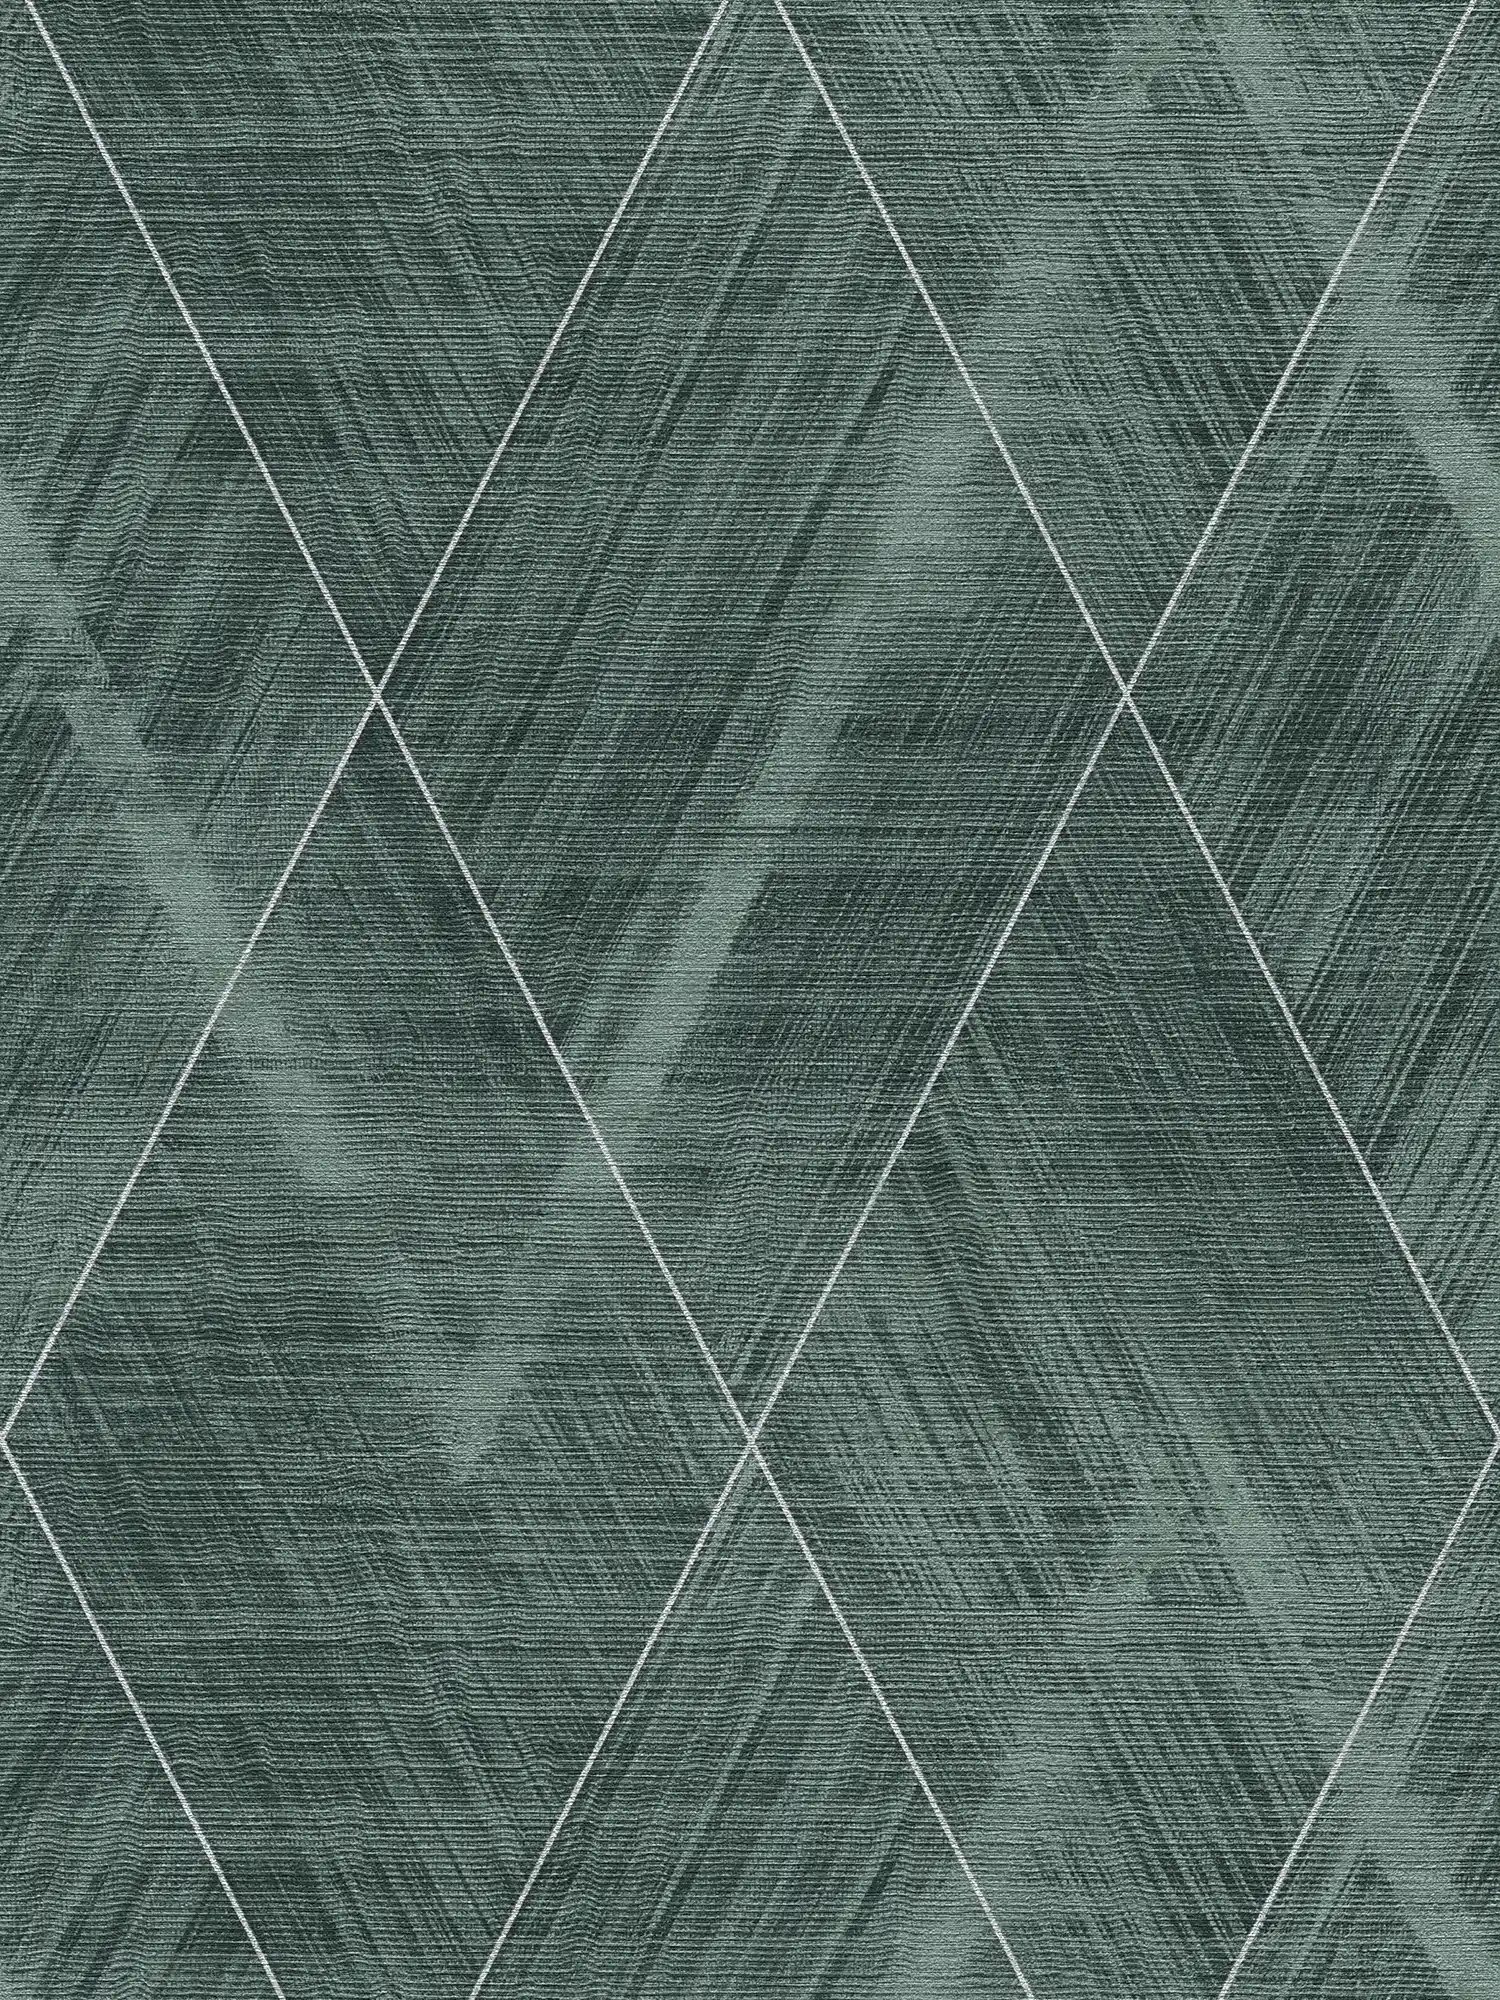         Rauten Tapete mit melierter Textiloptik – Metallic, Grün
    